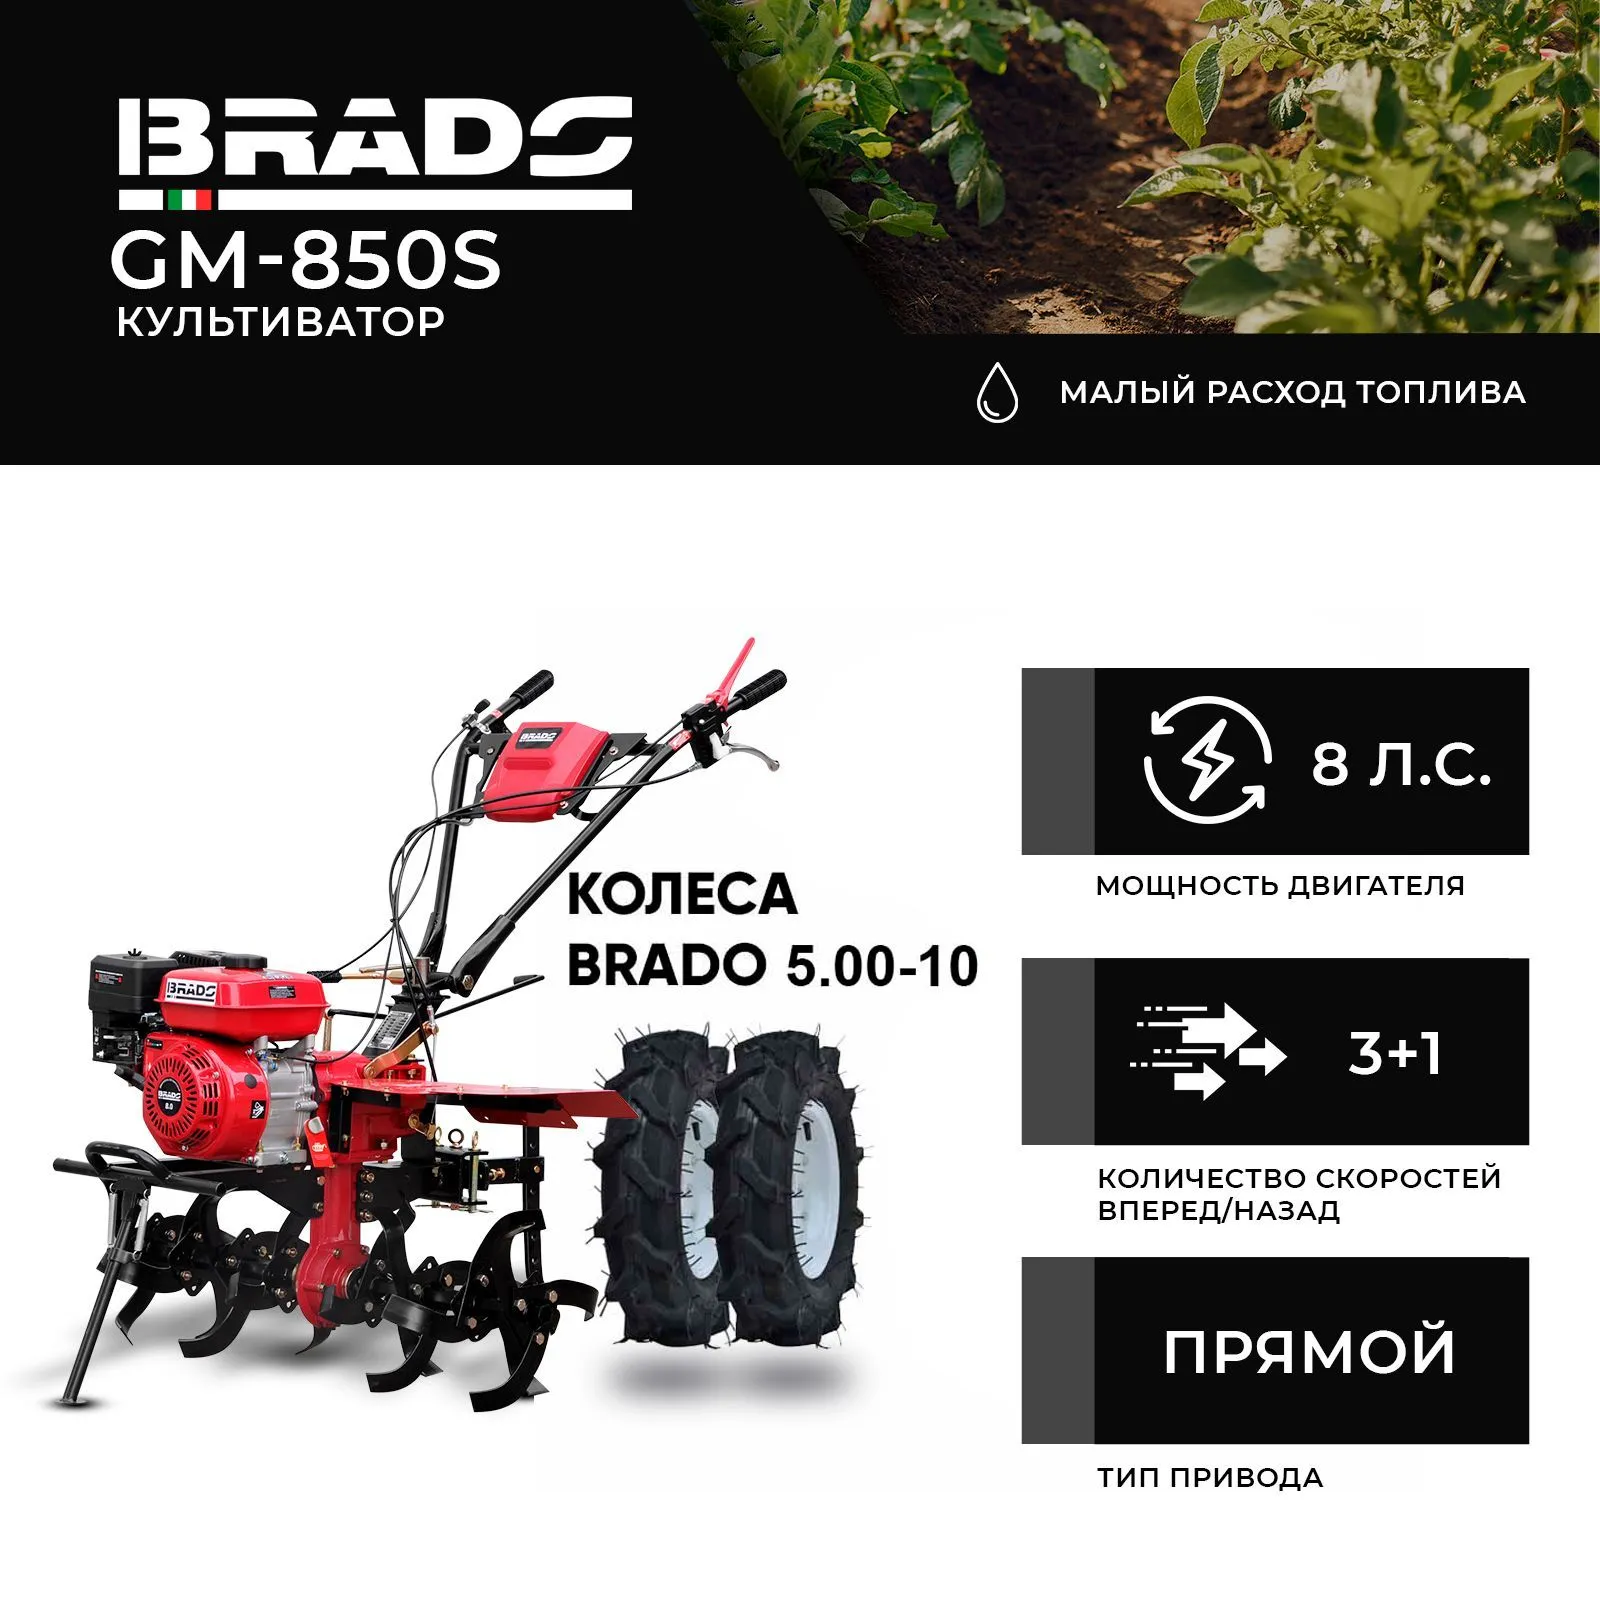 Brado GM-850S + колеса Brado 5.00-10 (2000290890020)